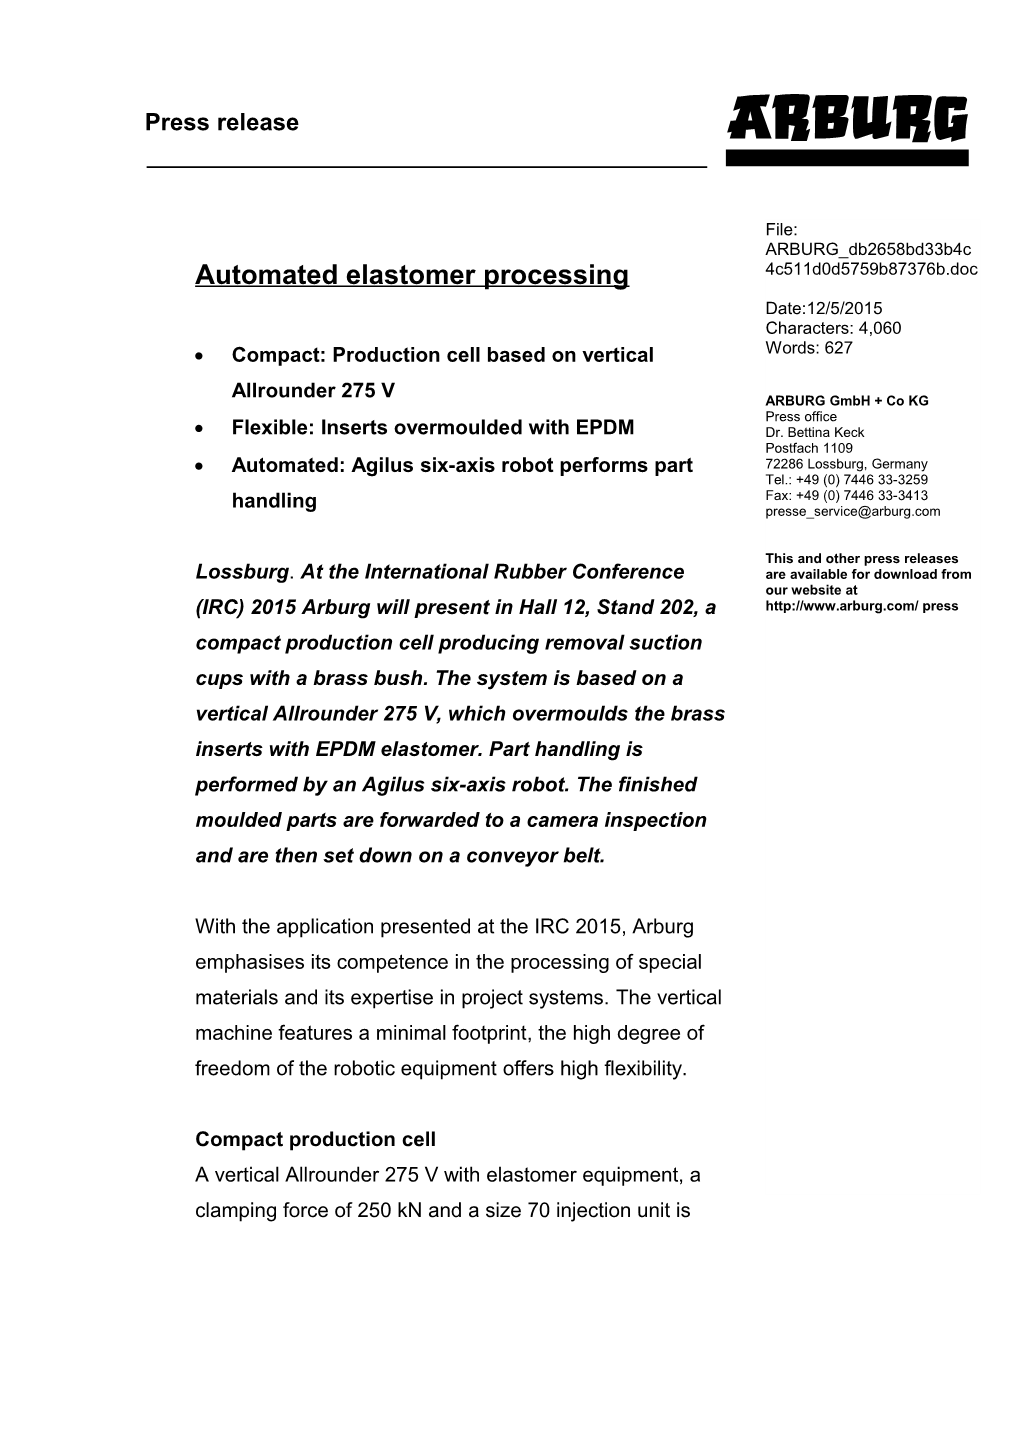 Automated Elastomer Processing